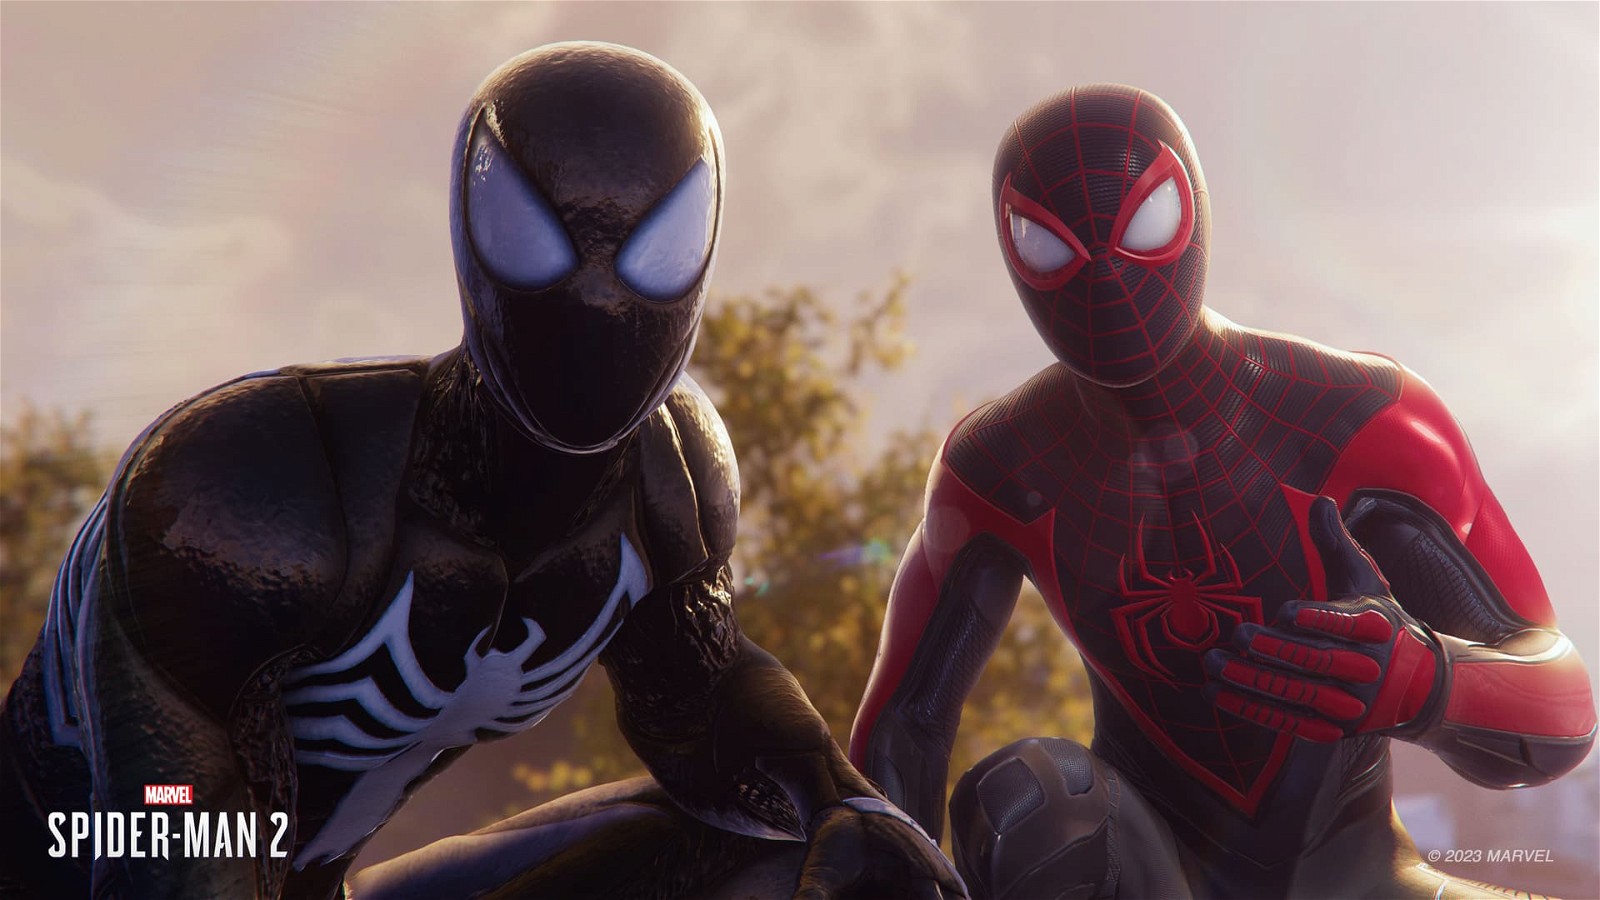 Spider-Man Seen in Venom Suit with Miles Morales in Spider-Man 2